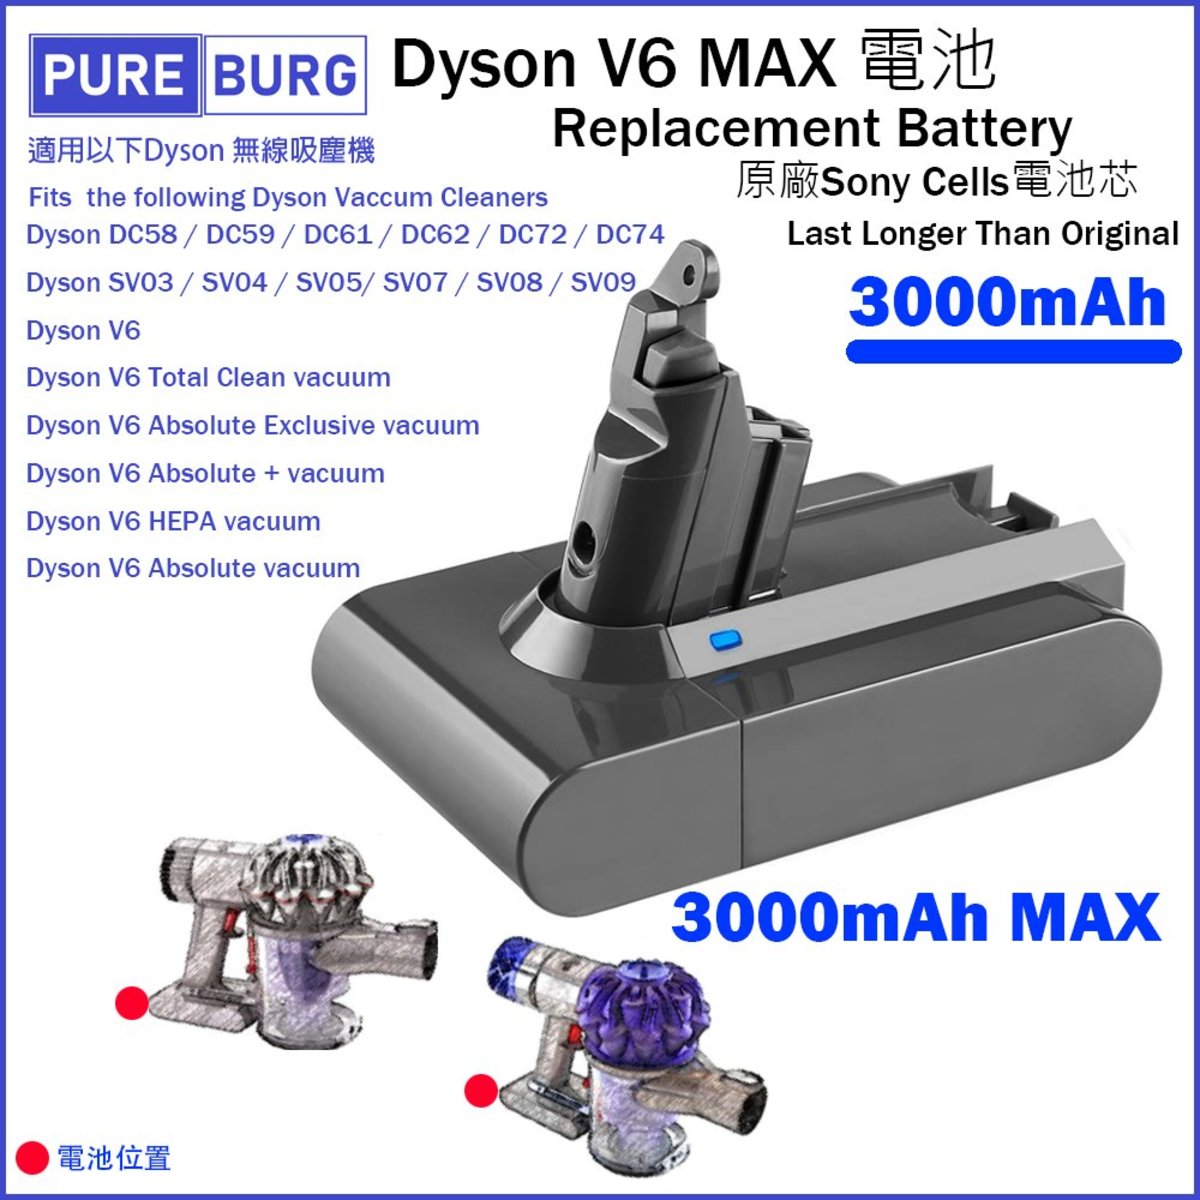 Pureburg | Replacement Lithium Battery 3000mAh for Dyson V6 DC58 DC61 DC72 SV06 SV07 SV08 SV09 | HKTVmall The Largest HK Shopping Platform